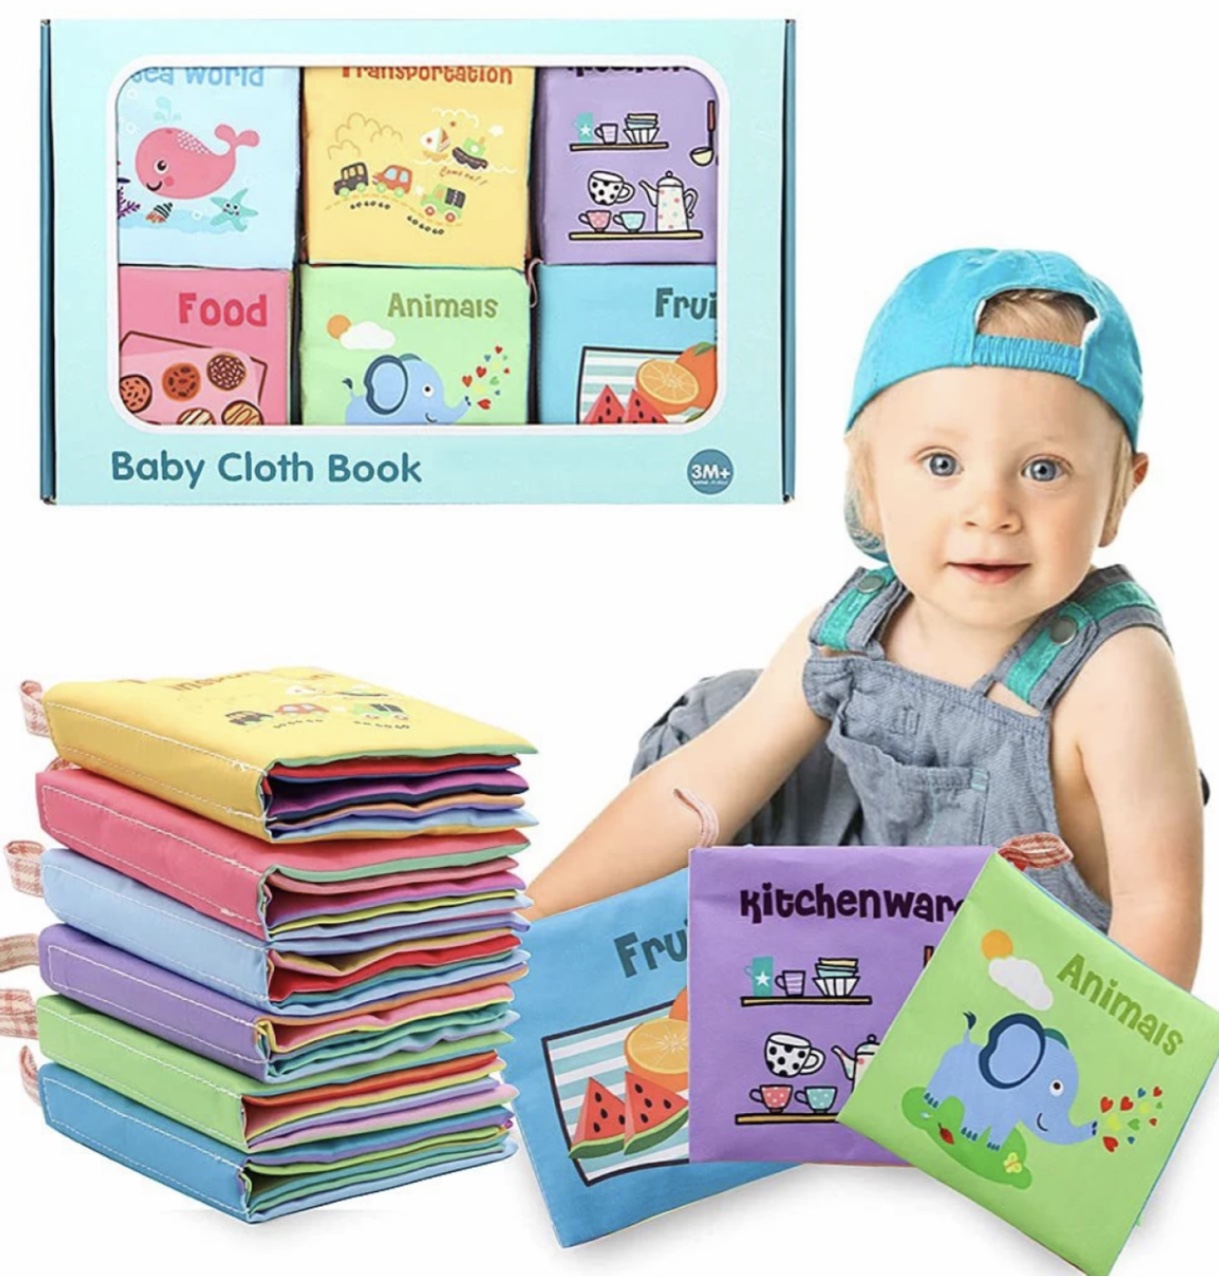 Baby cloth book